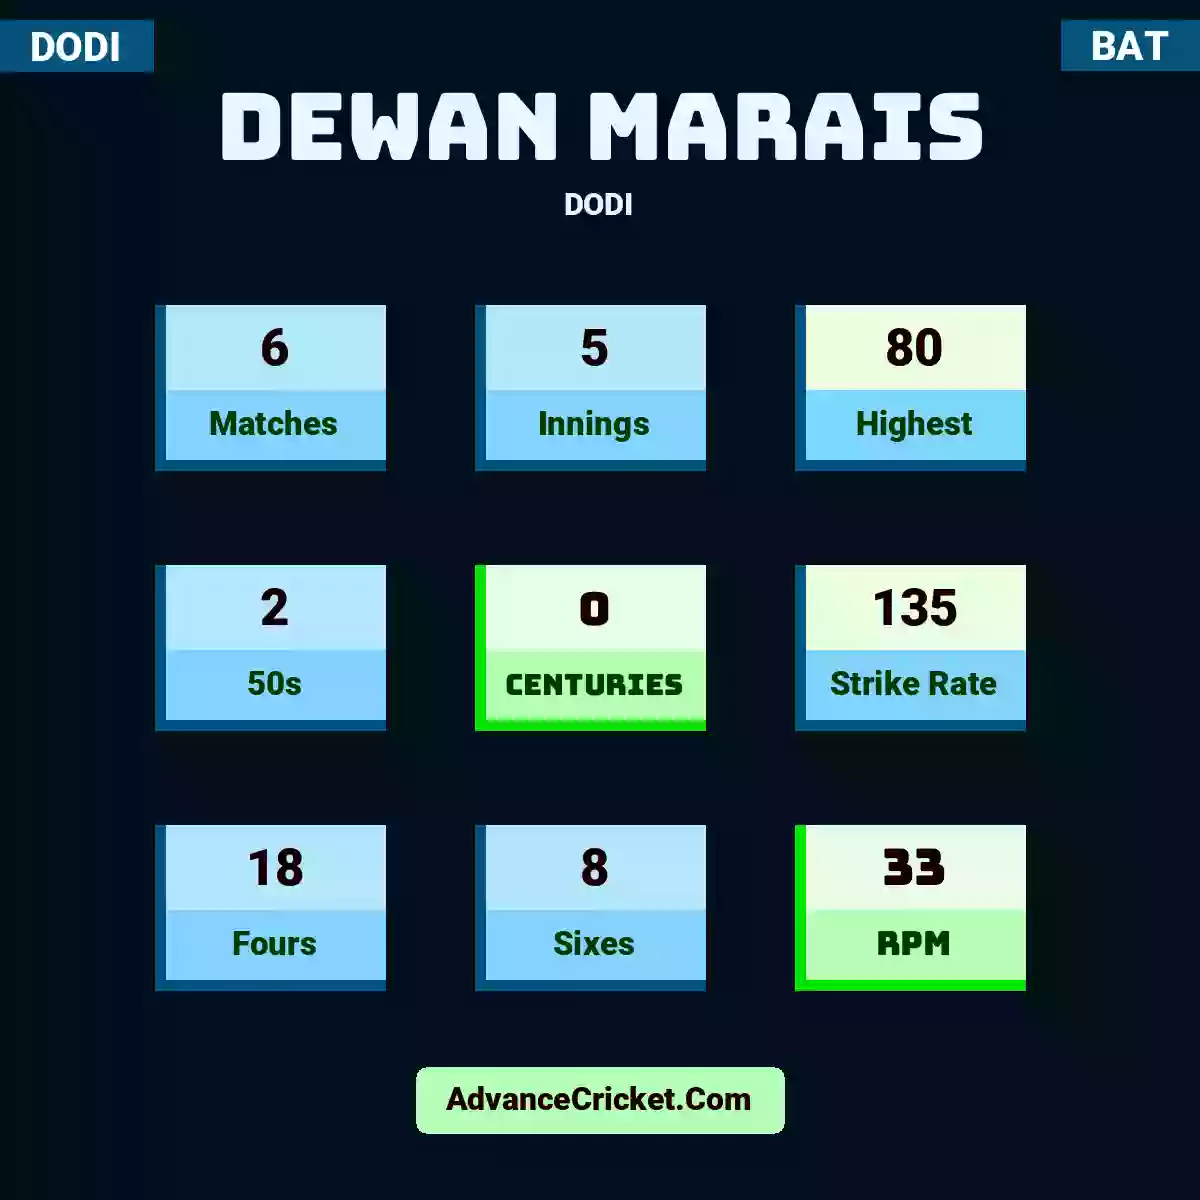 Dewan Marais DODI , Dewan Marais played 6 matches, scored 80 runs as highest, 2 half-centuries, and 0 centuries, with a strike rate of 135. D.Marais hit 18 fours and 8 sixes, with an RPM of 33.